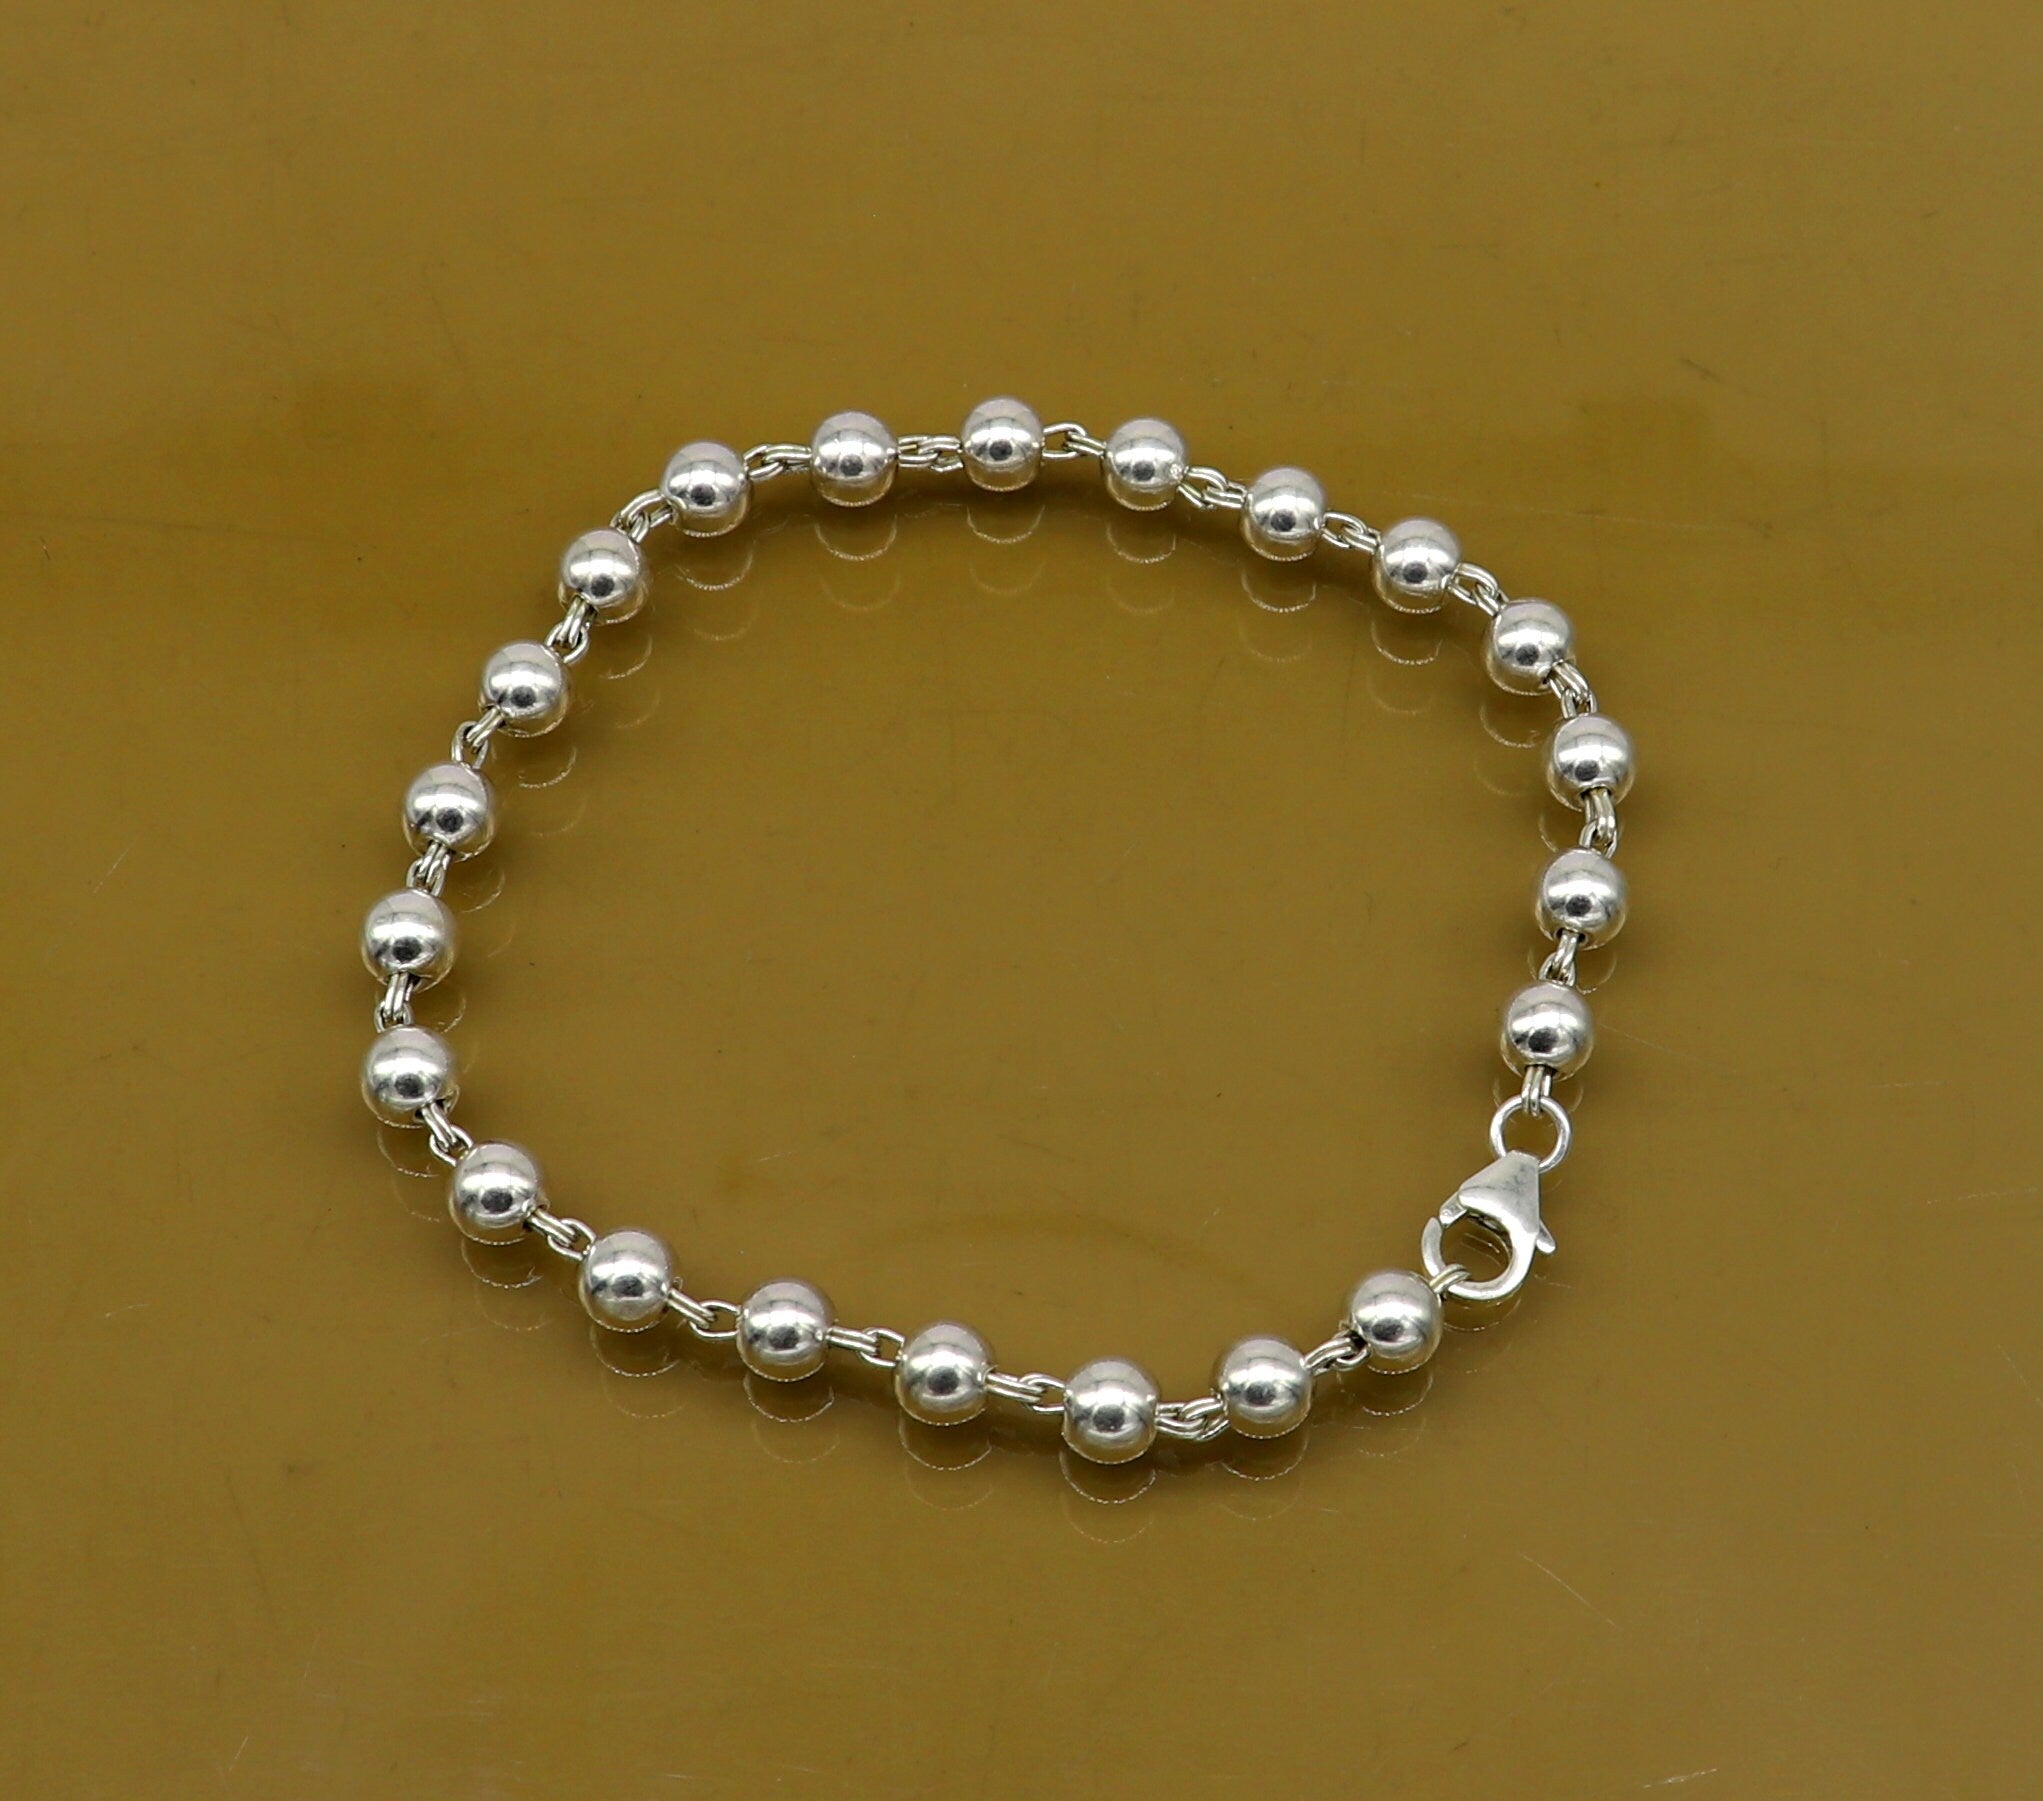 Silver bracelet ball chain thin